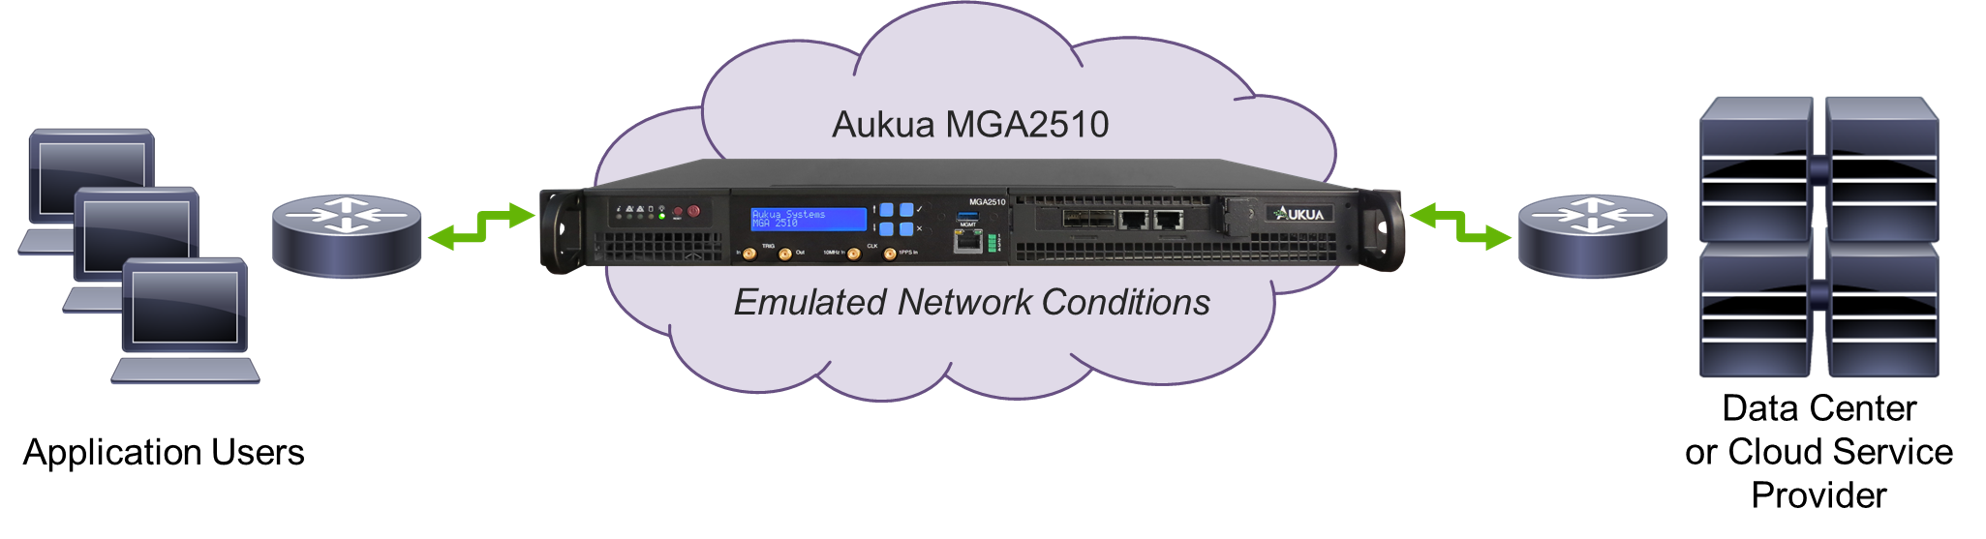 Example showing Aukua MGA2510 Network Emulation Solution